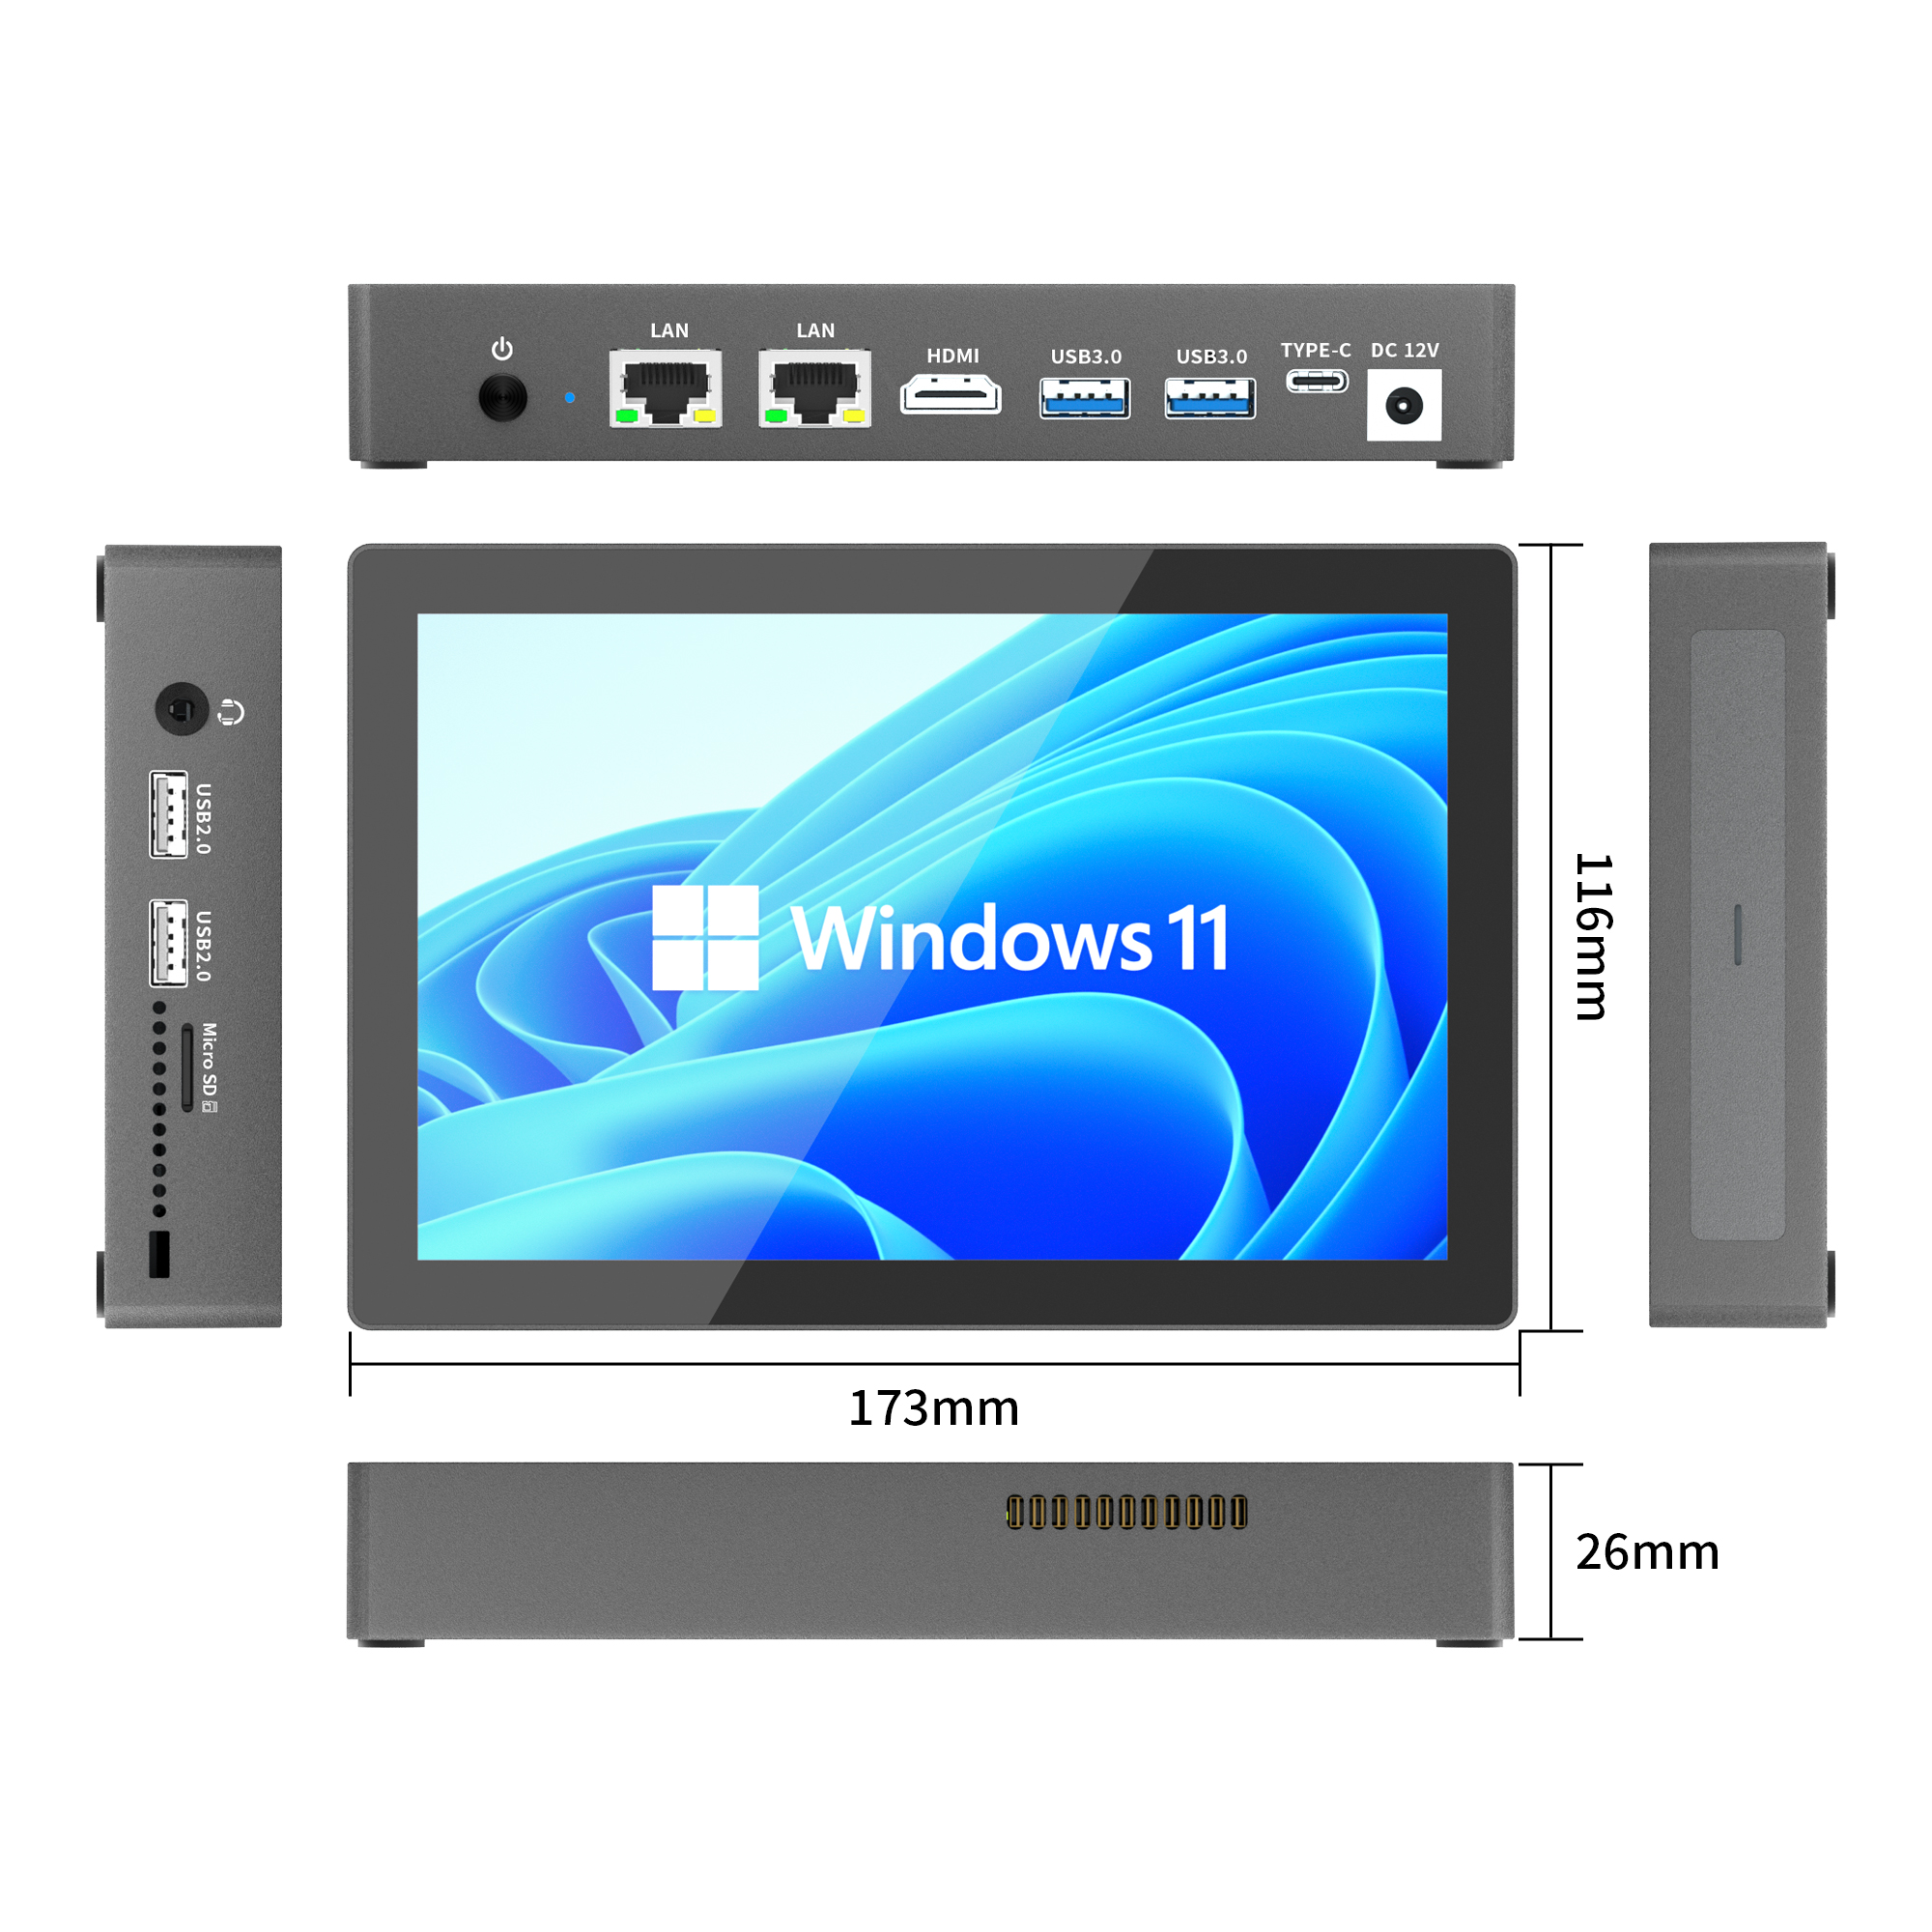 Higole F9B 7-Inch Screen Mini PC with 5000mAh Battery - Intel Celeron N100, 16GB LPDDR4, 512GB ROM, Windows 11 Pro